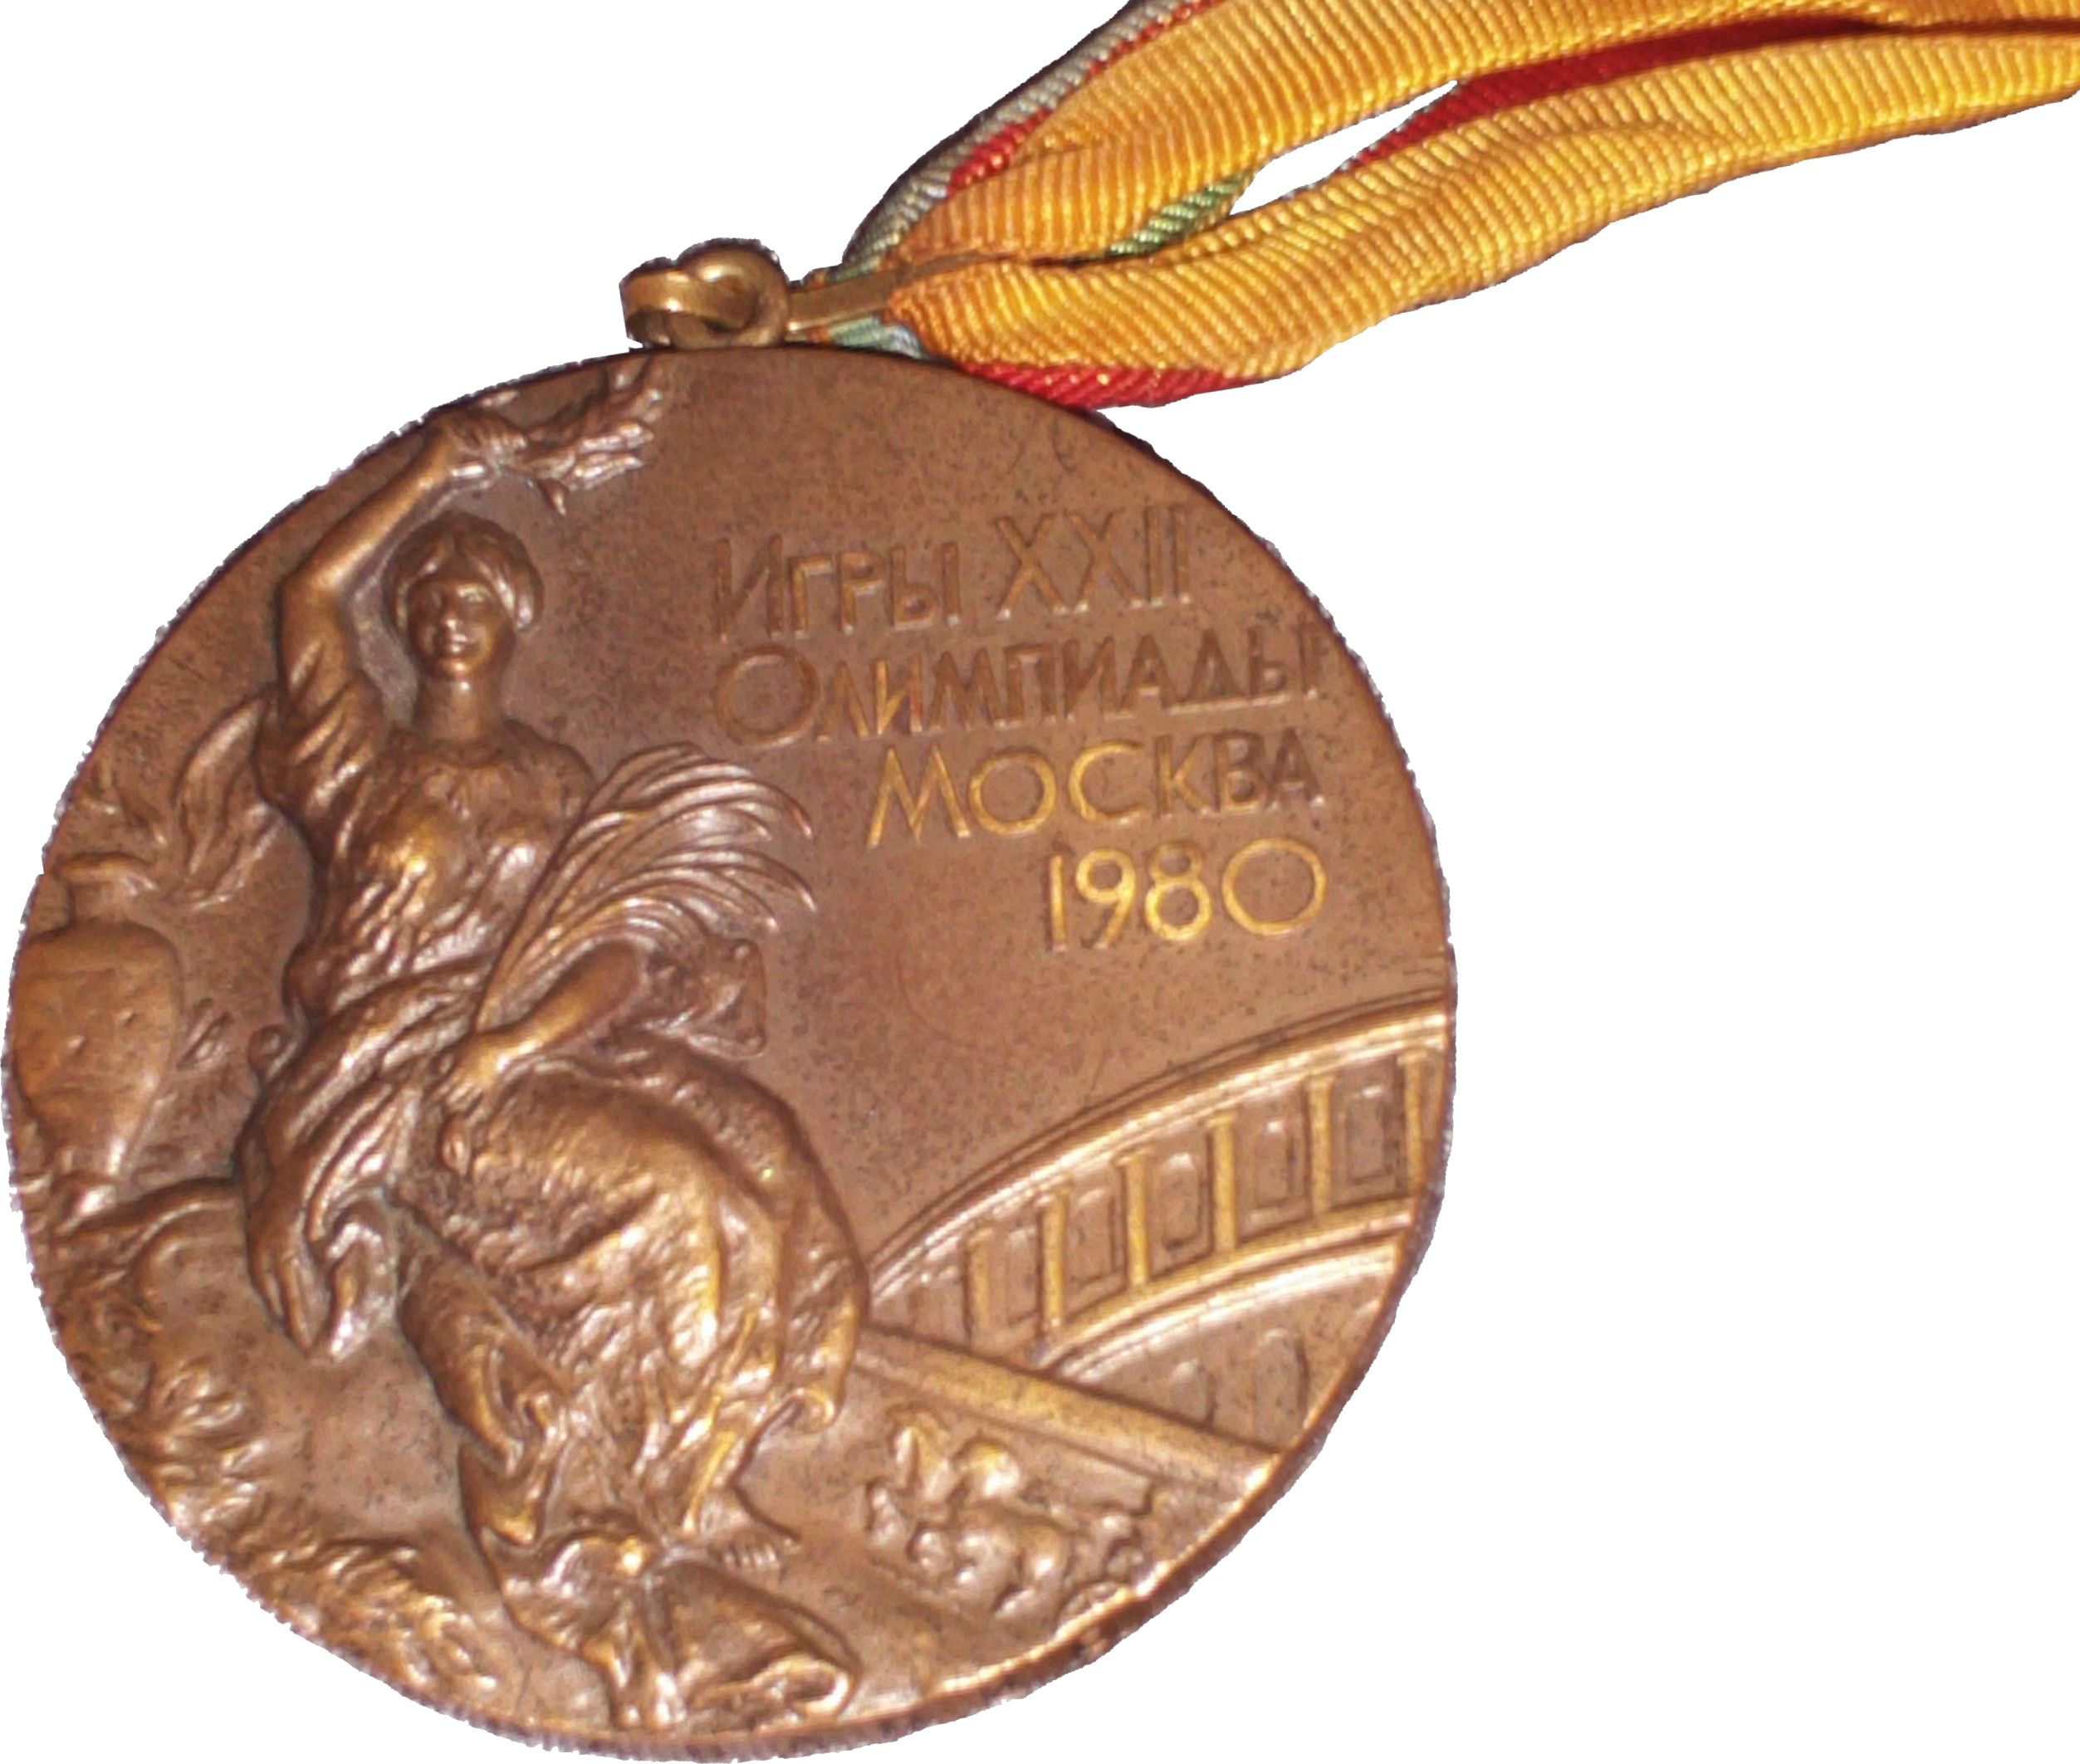 A Close Up Of A Medal